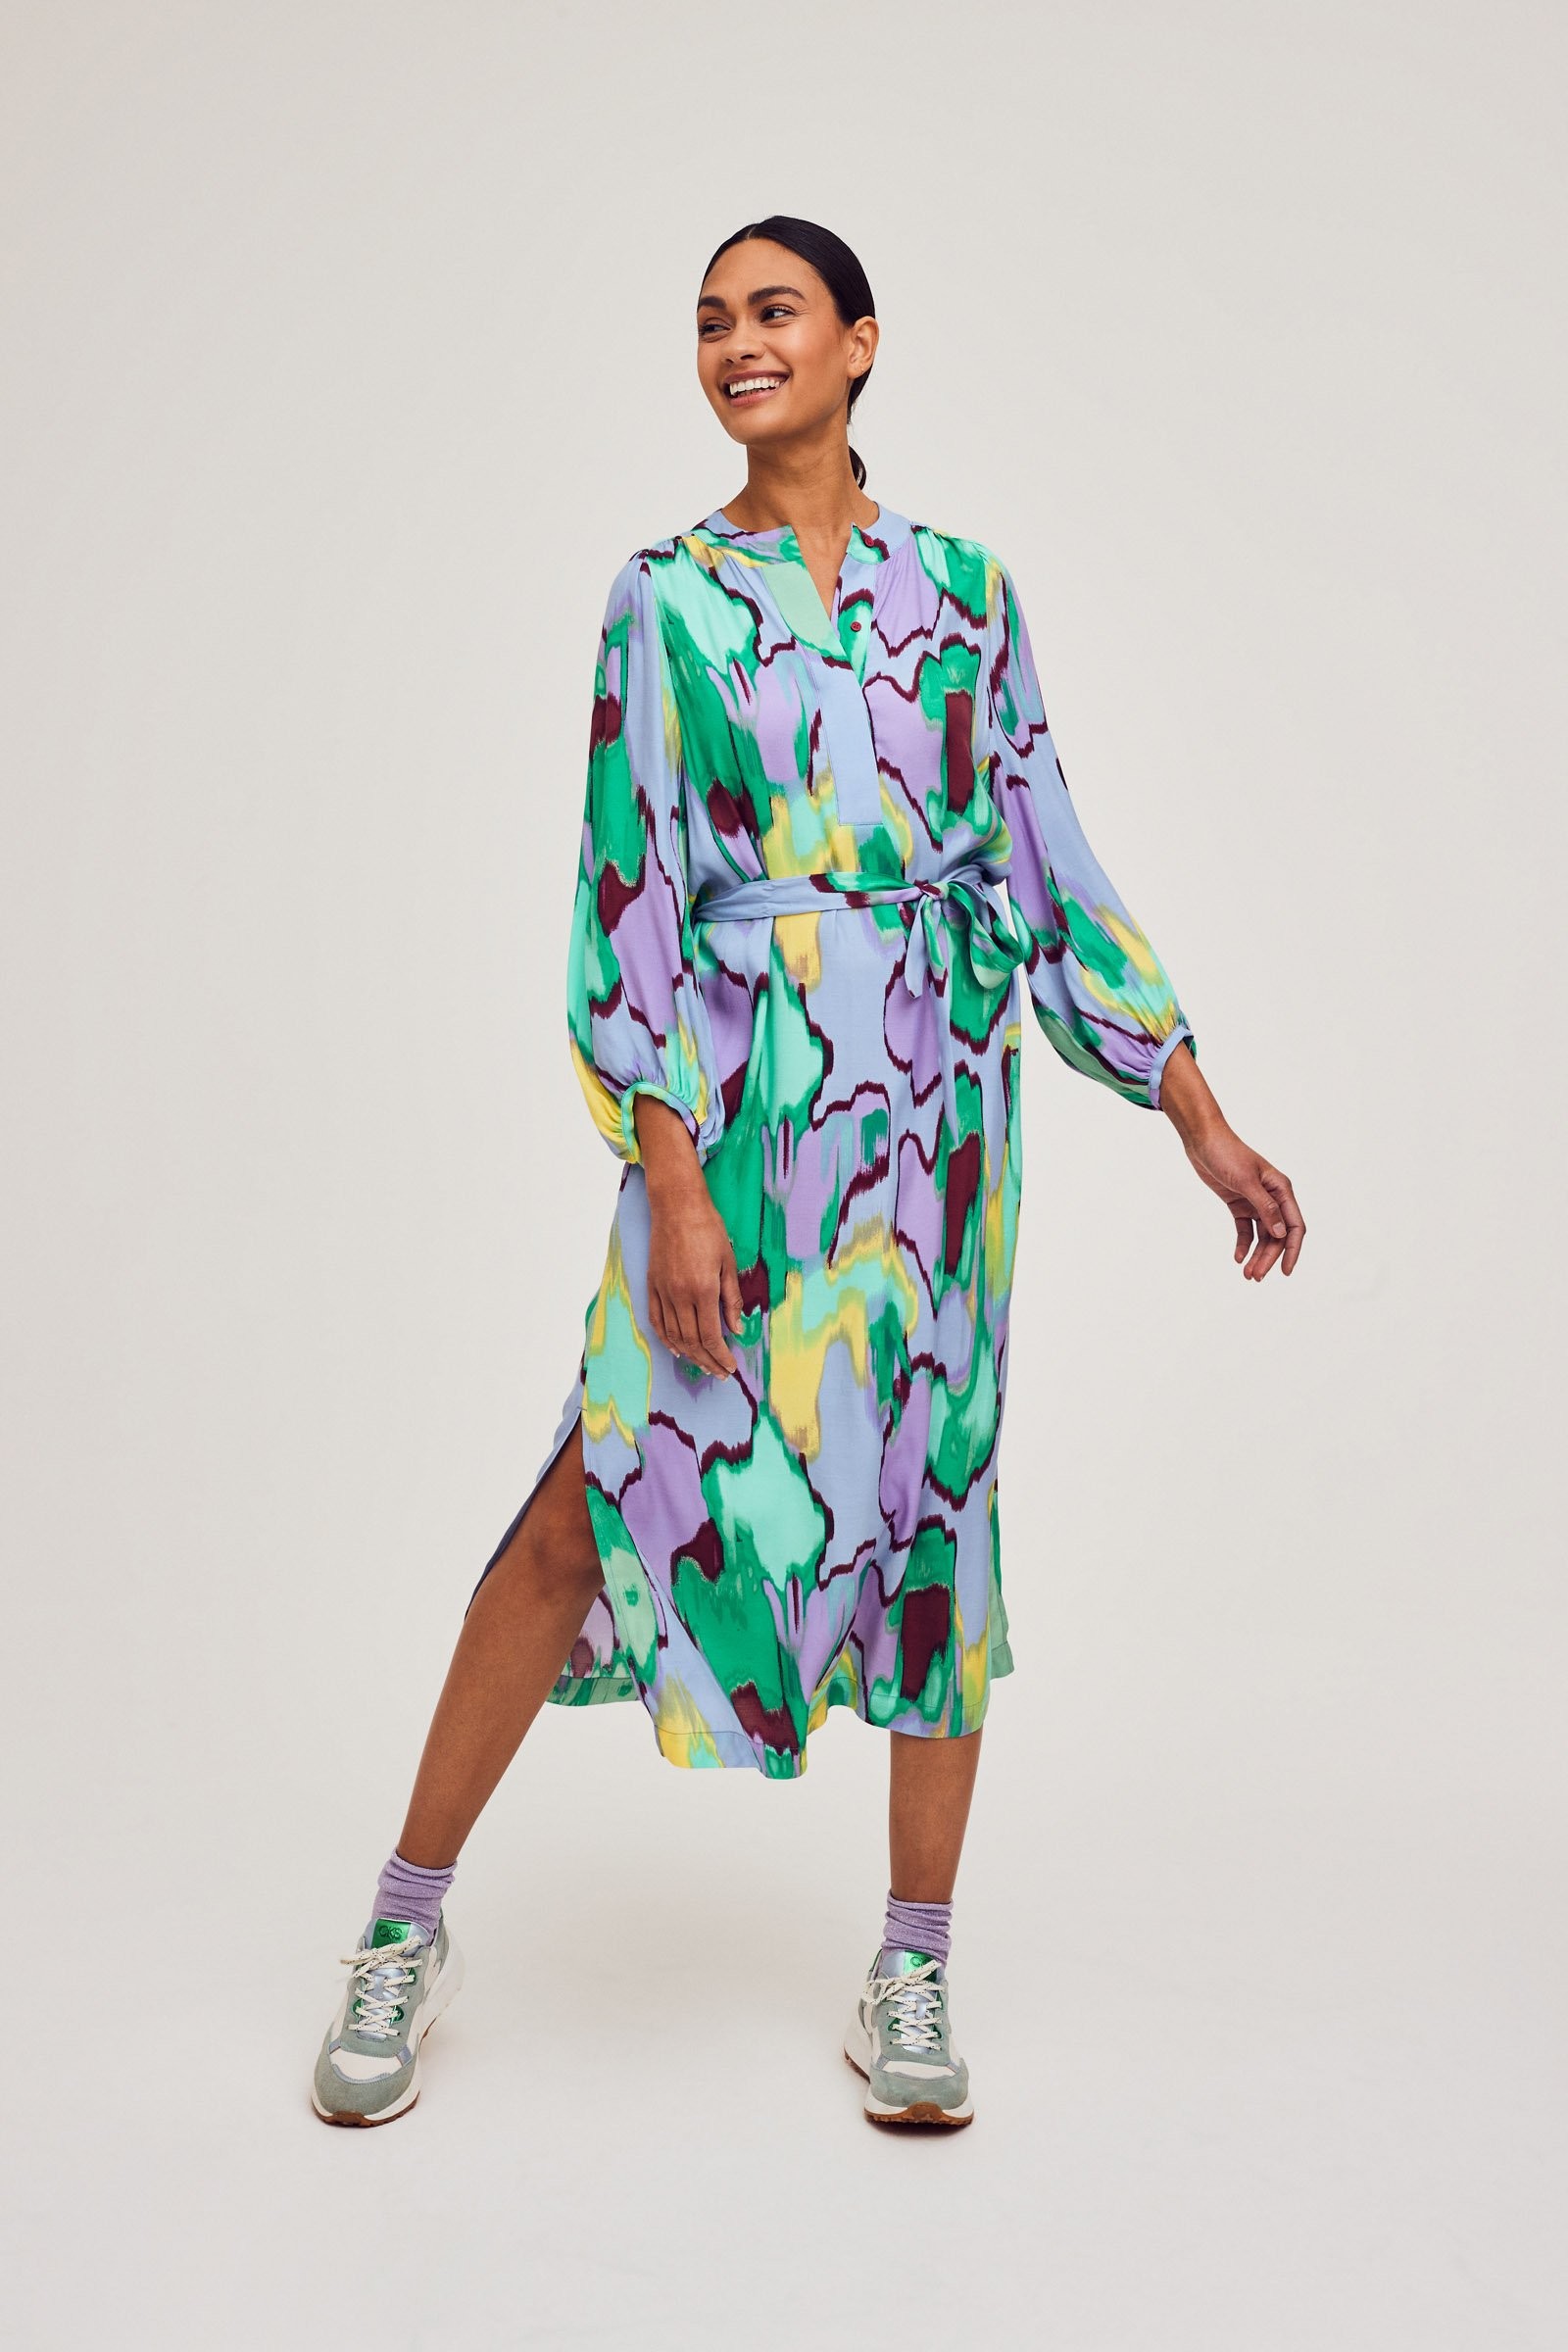 Uitgestorven Kosten Gooi SALOMEDO - midi jurk - meerkleurig | CKS Fashion